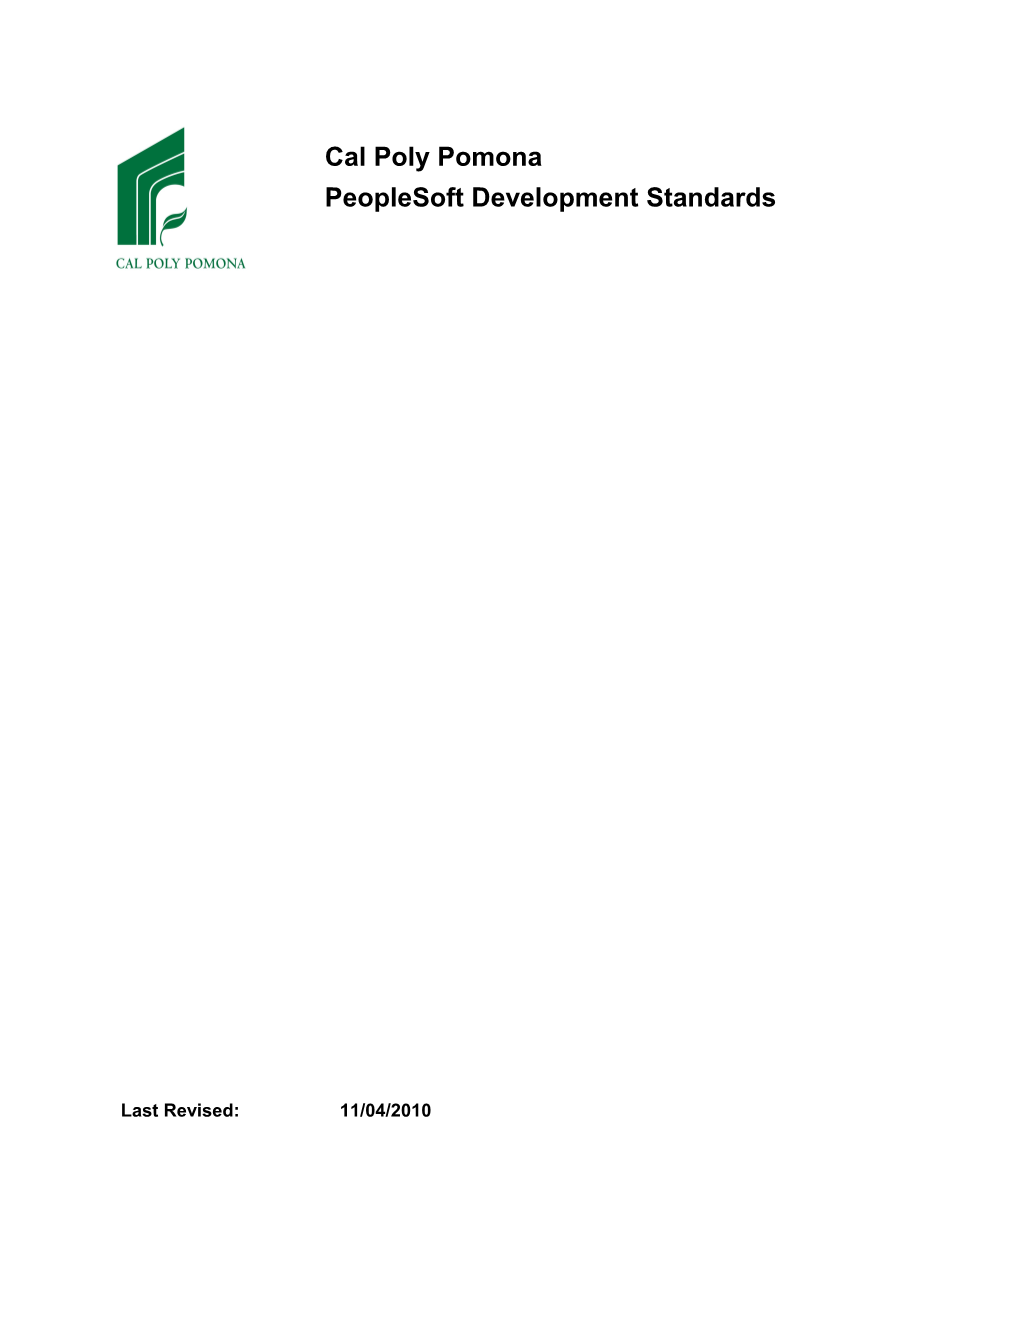 Pomona Peoplesoft Development Standardsdraft